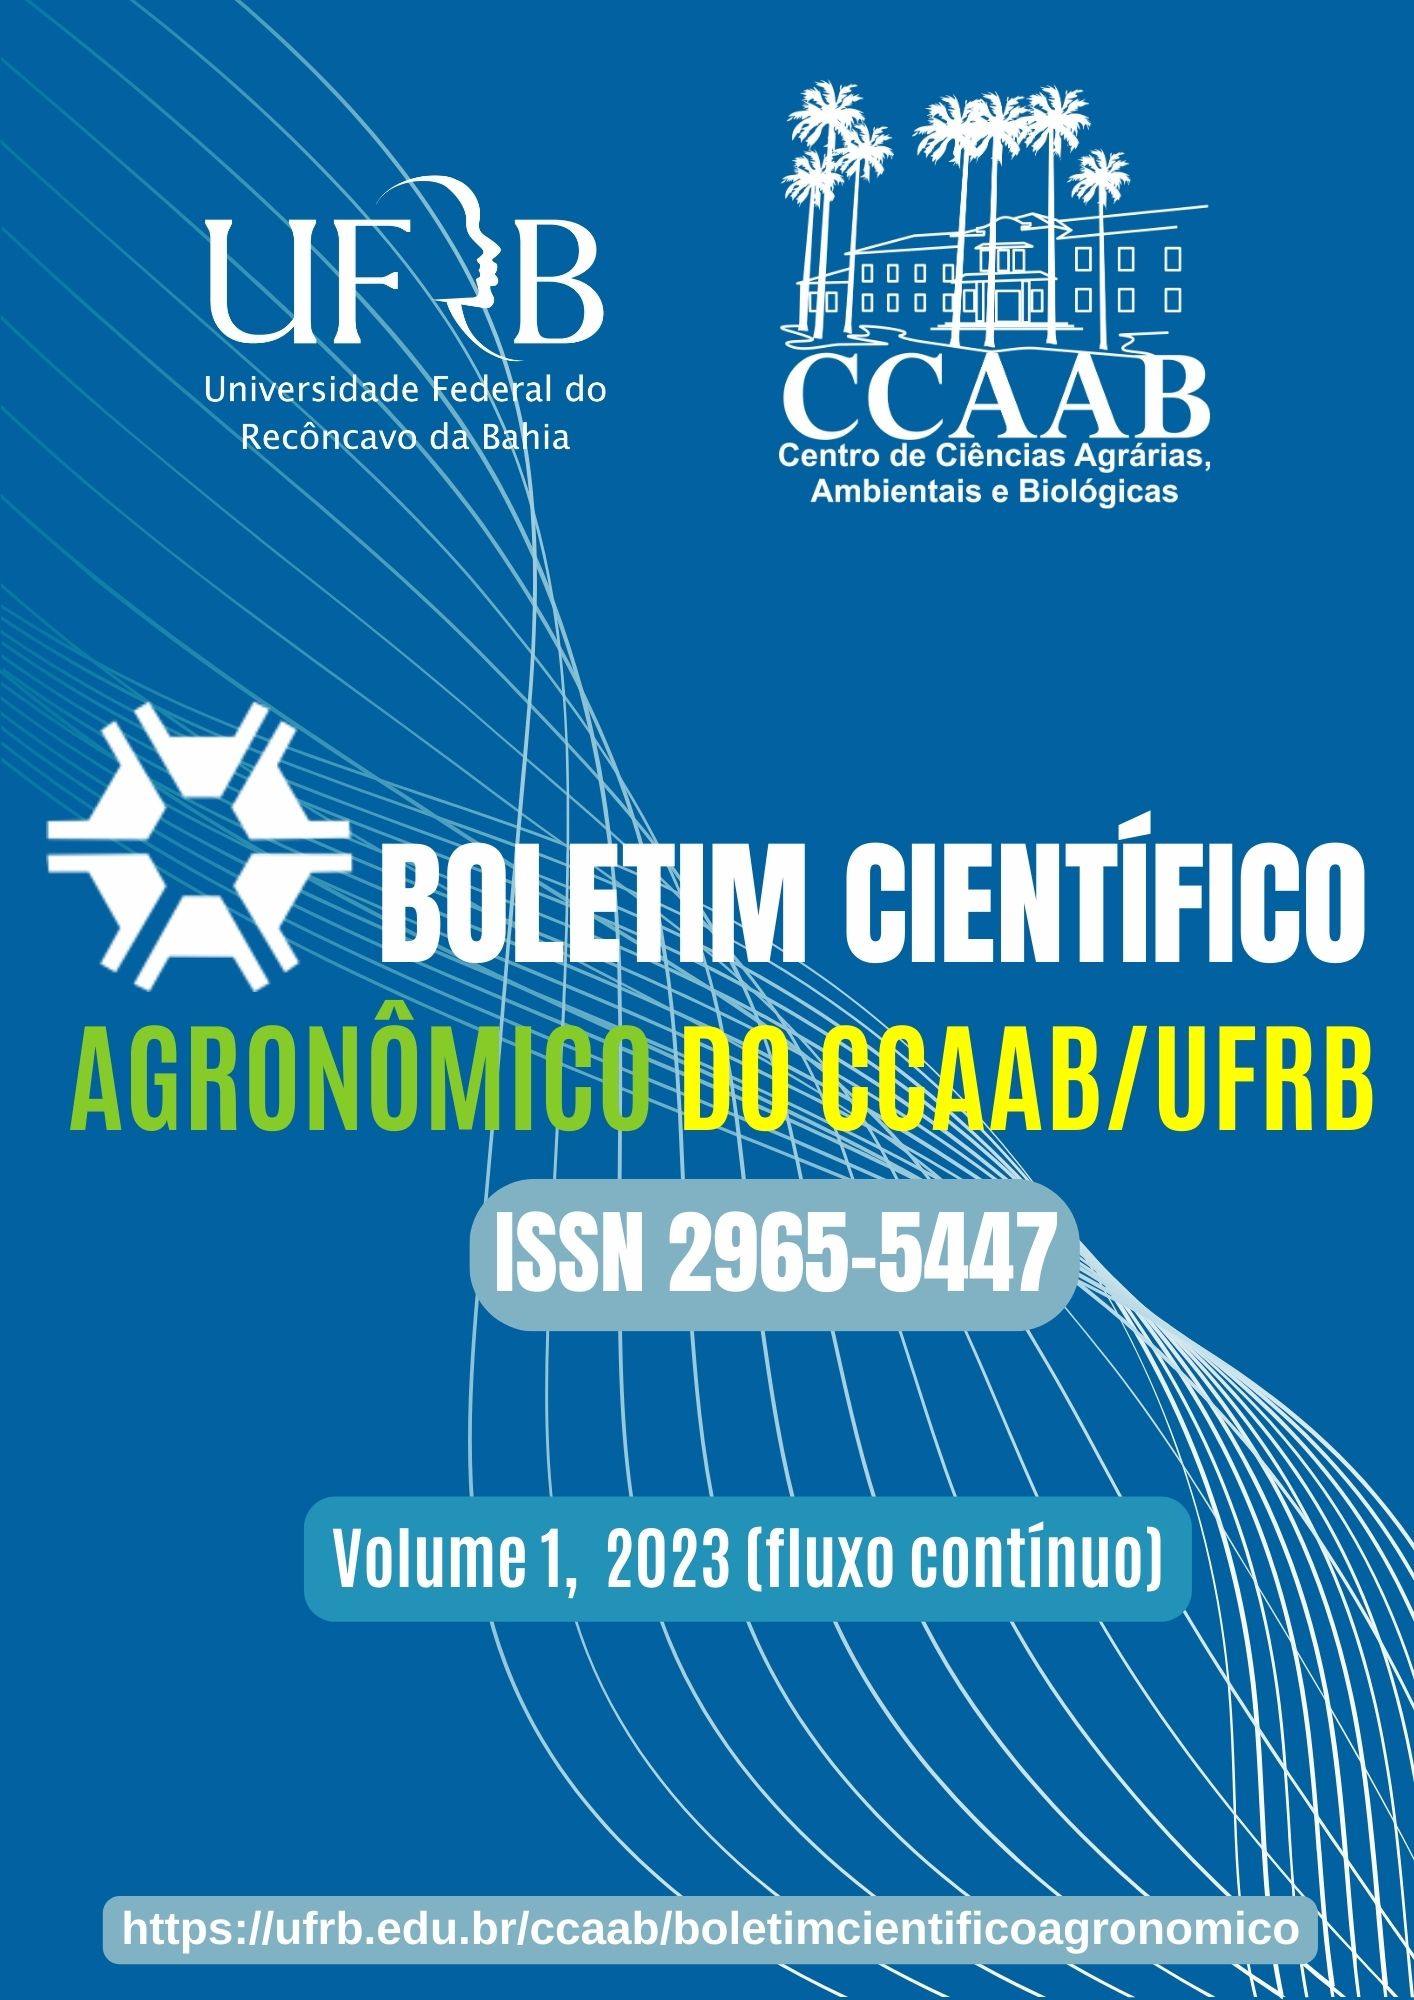 BOLETIM CIENTÍFICO Boletim Científico Agronômico do CCAAB da UFRB